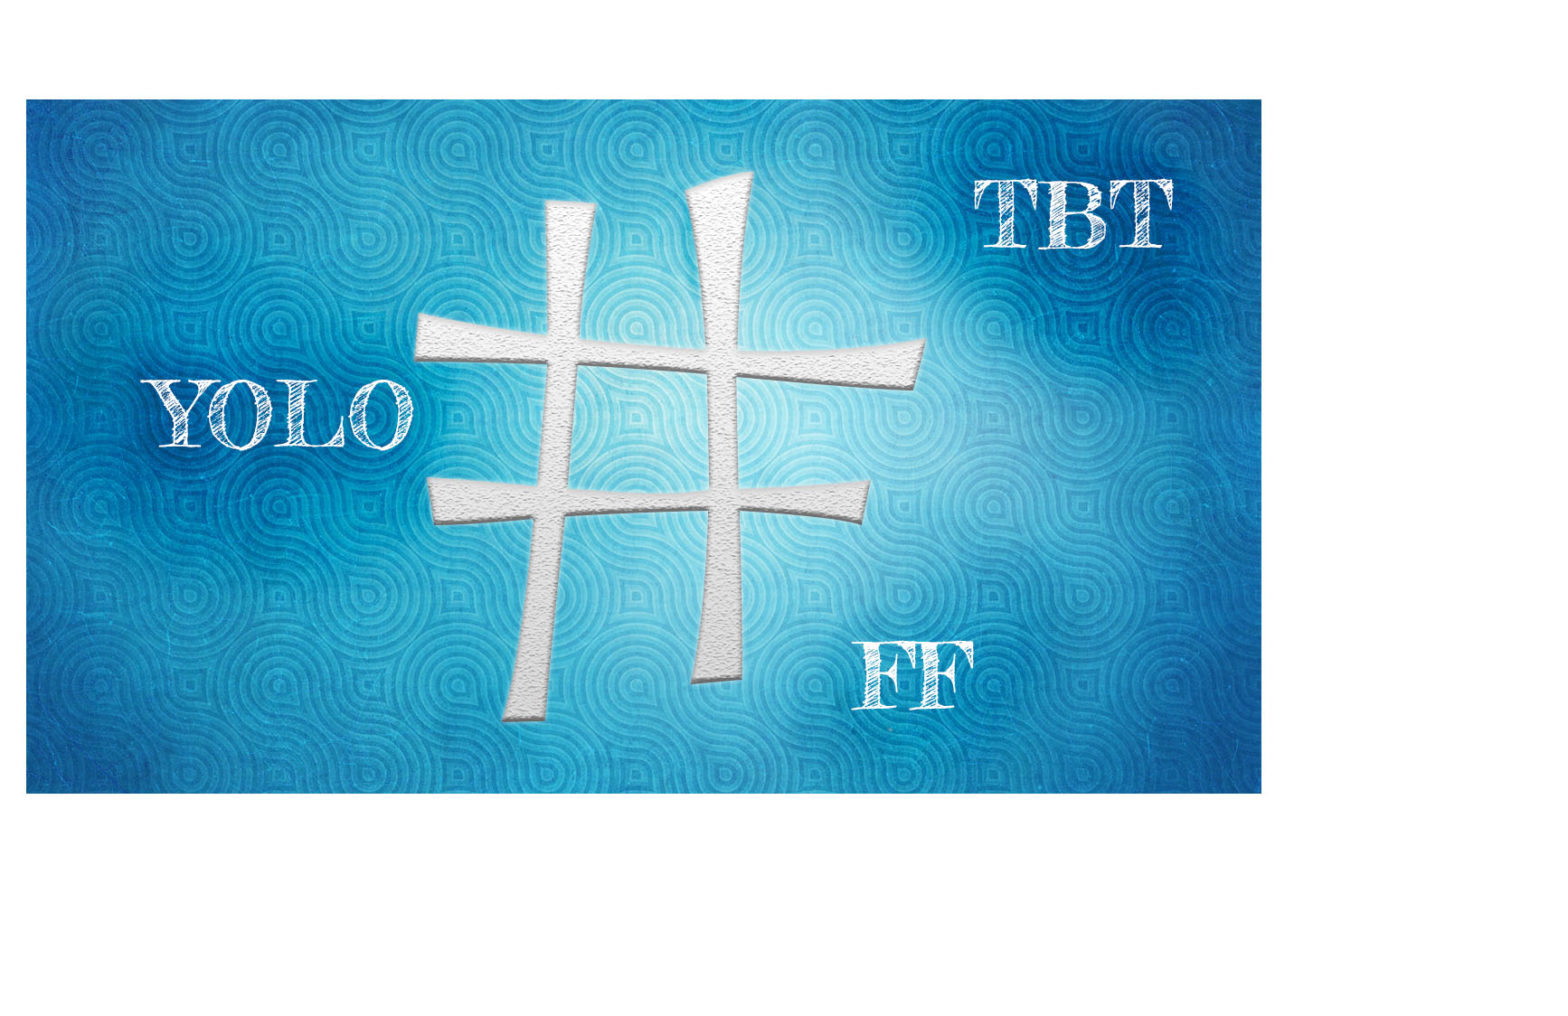 Significado de #TBT e outros termos e hashtags